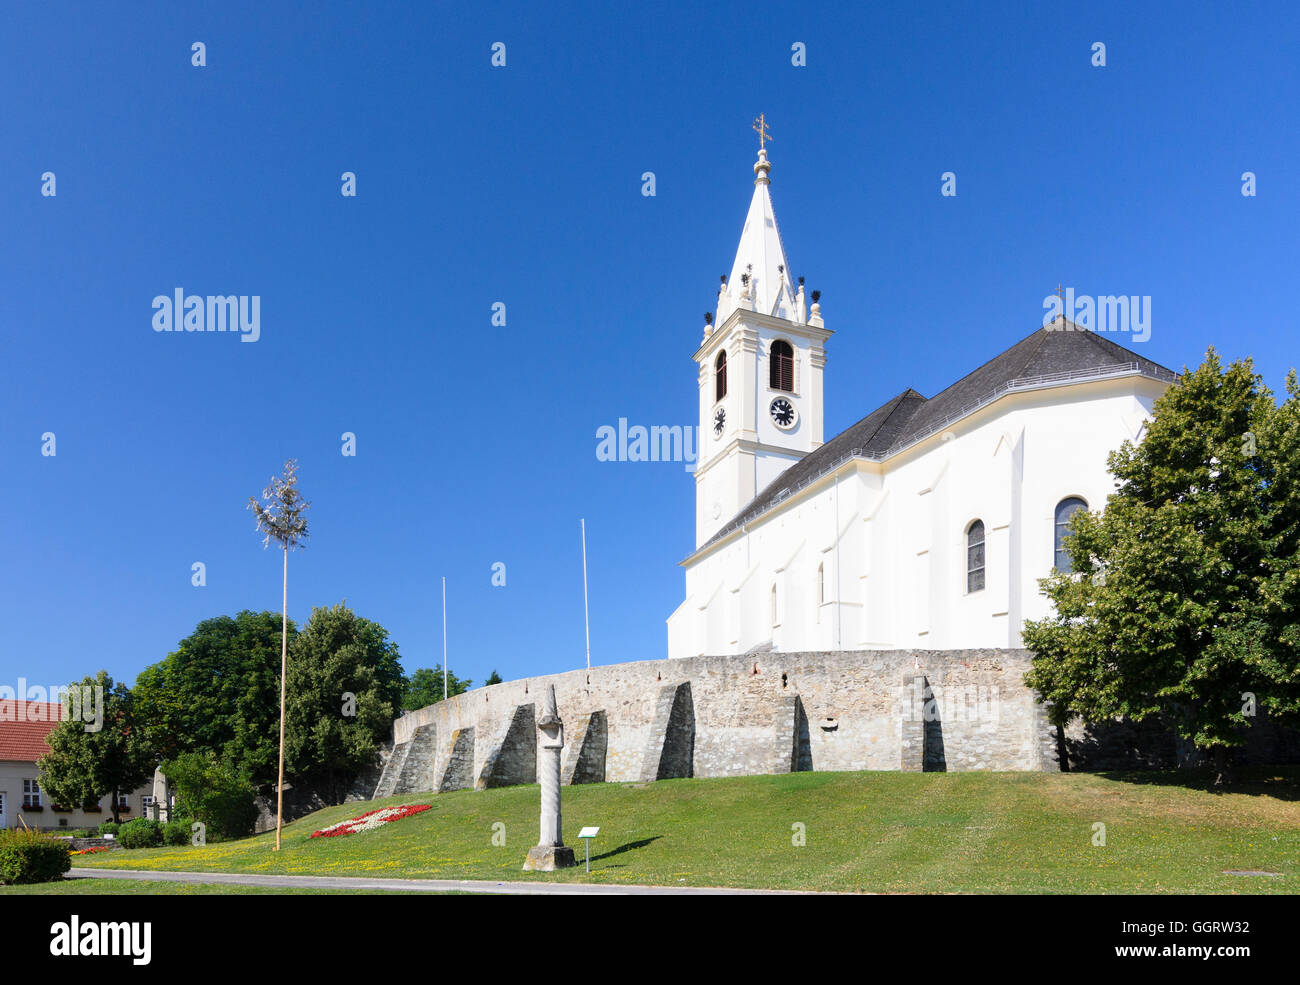 Marz: church Mariae coronation and light column, Austria, Burgenland, Stock Photo